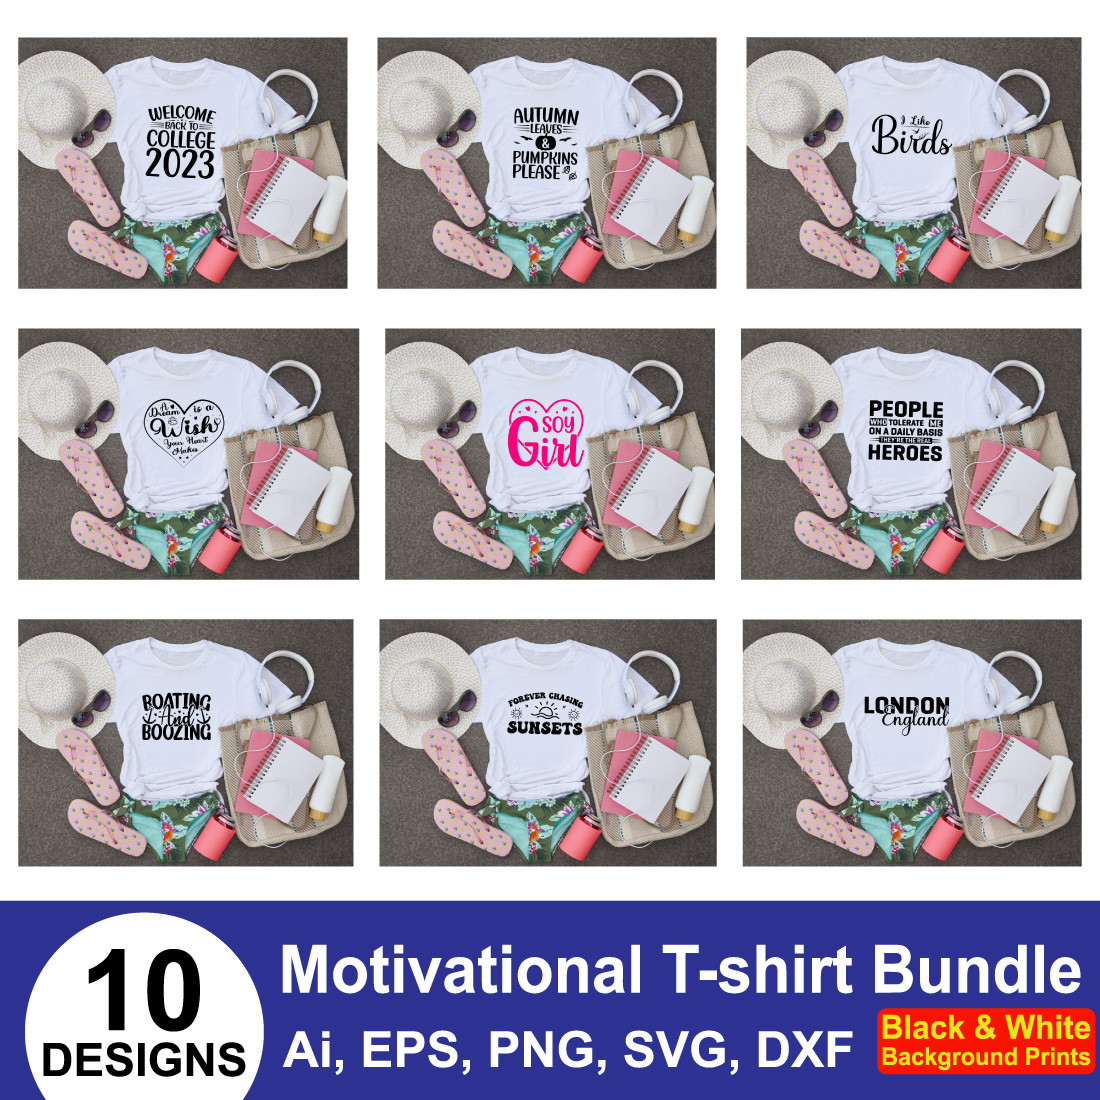 Minimalist Motivational T-shirt Design Bundle different mockup example.